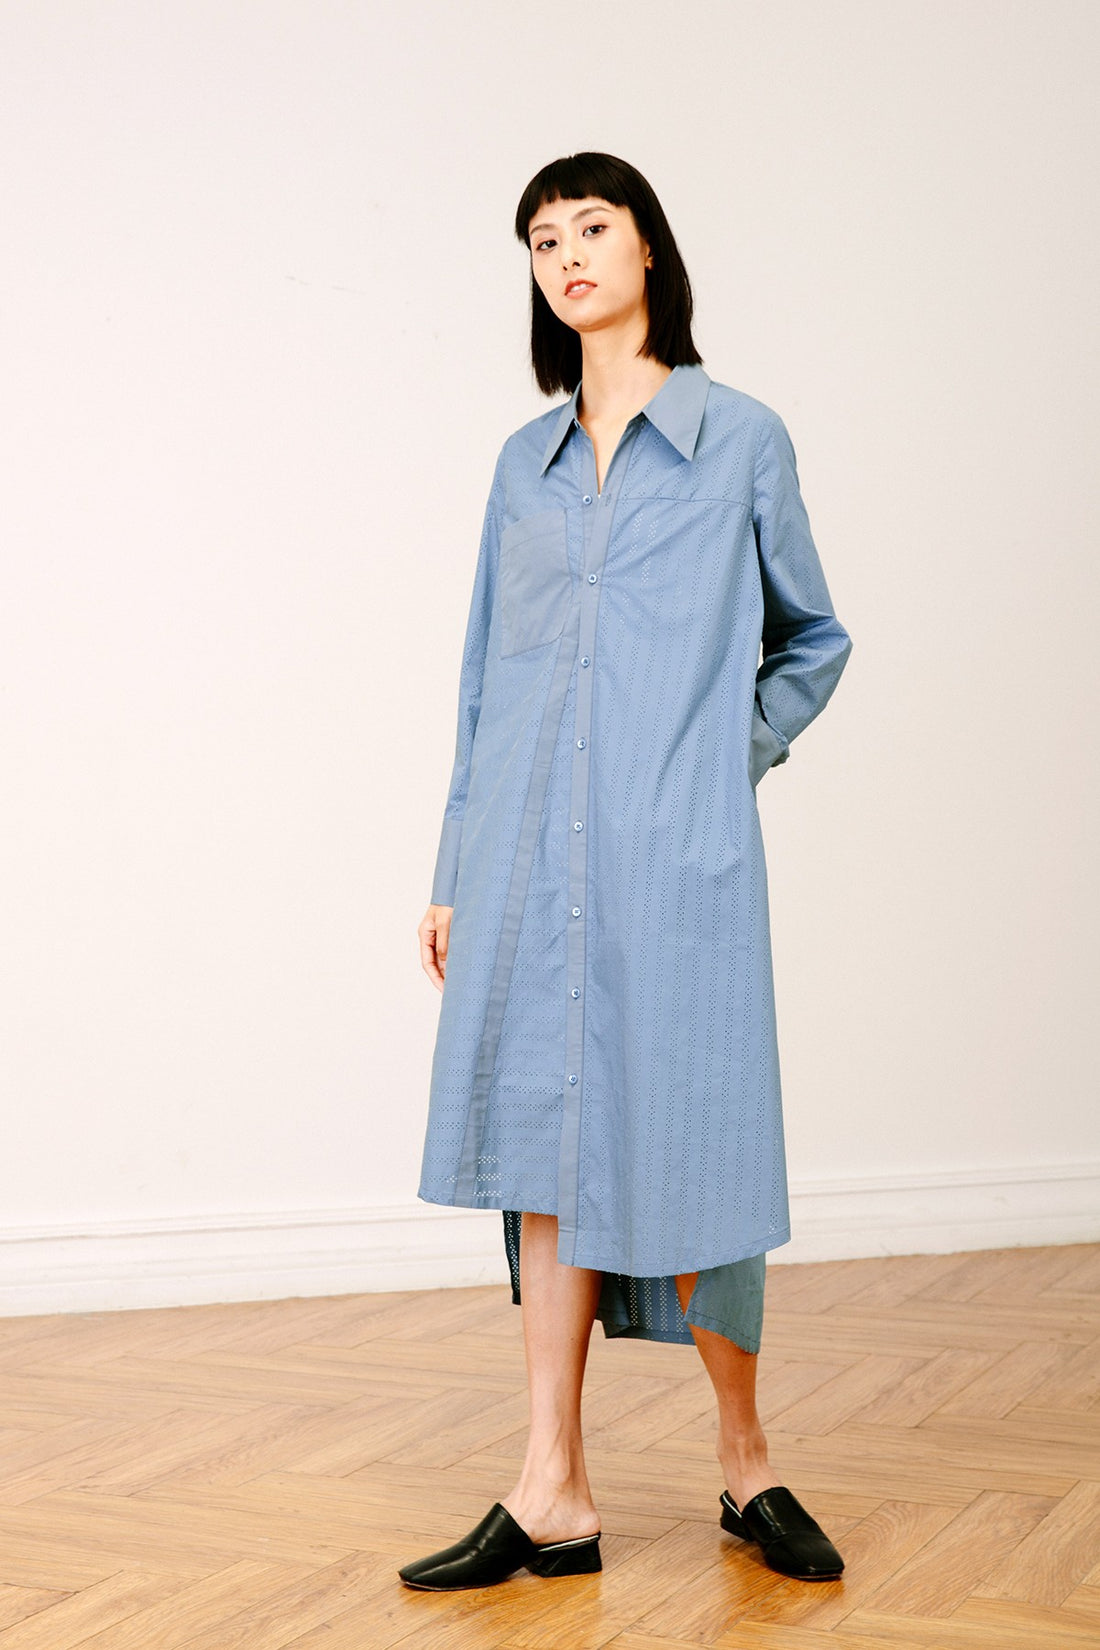 SKYE San Francisco SF California shop ethical sustainable modern chic minimalist luxury clothing women fashion Olivia Shirt Dress blue 2